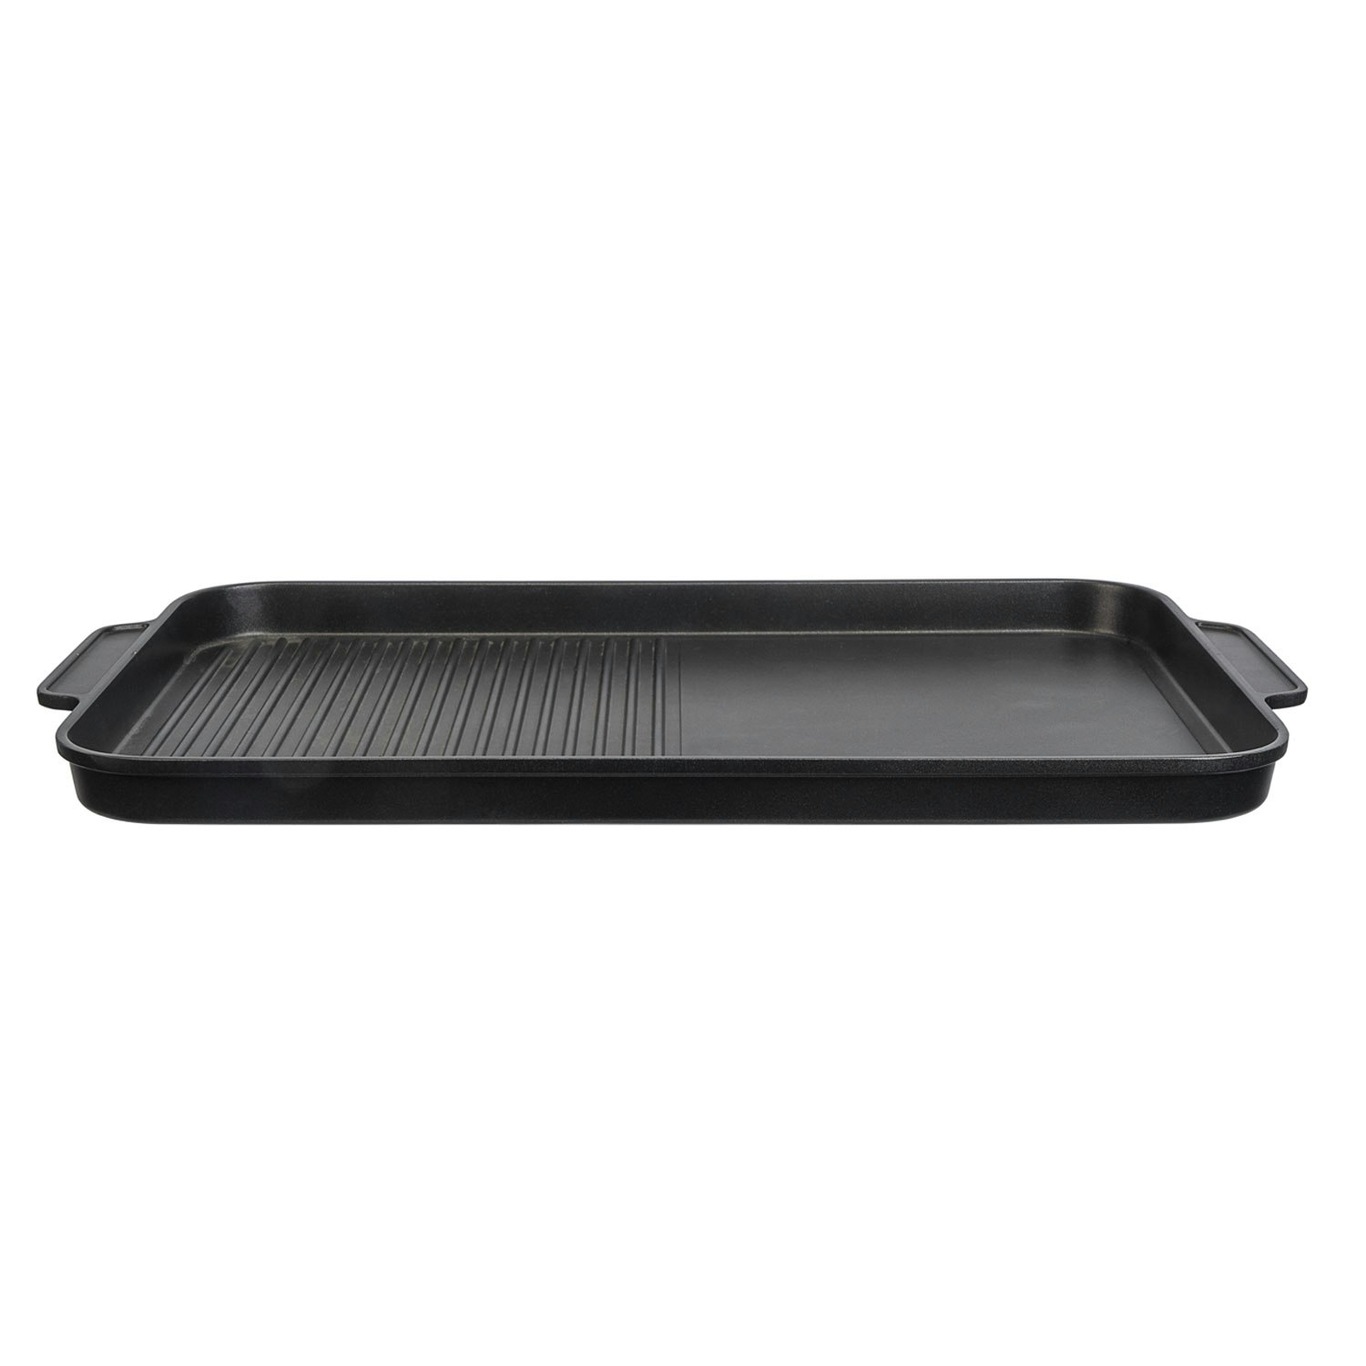 MasterClass Aluminium 32cm 3-Section Grill Pan